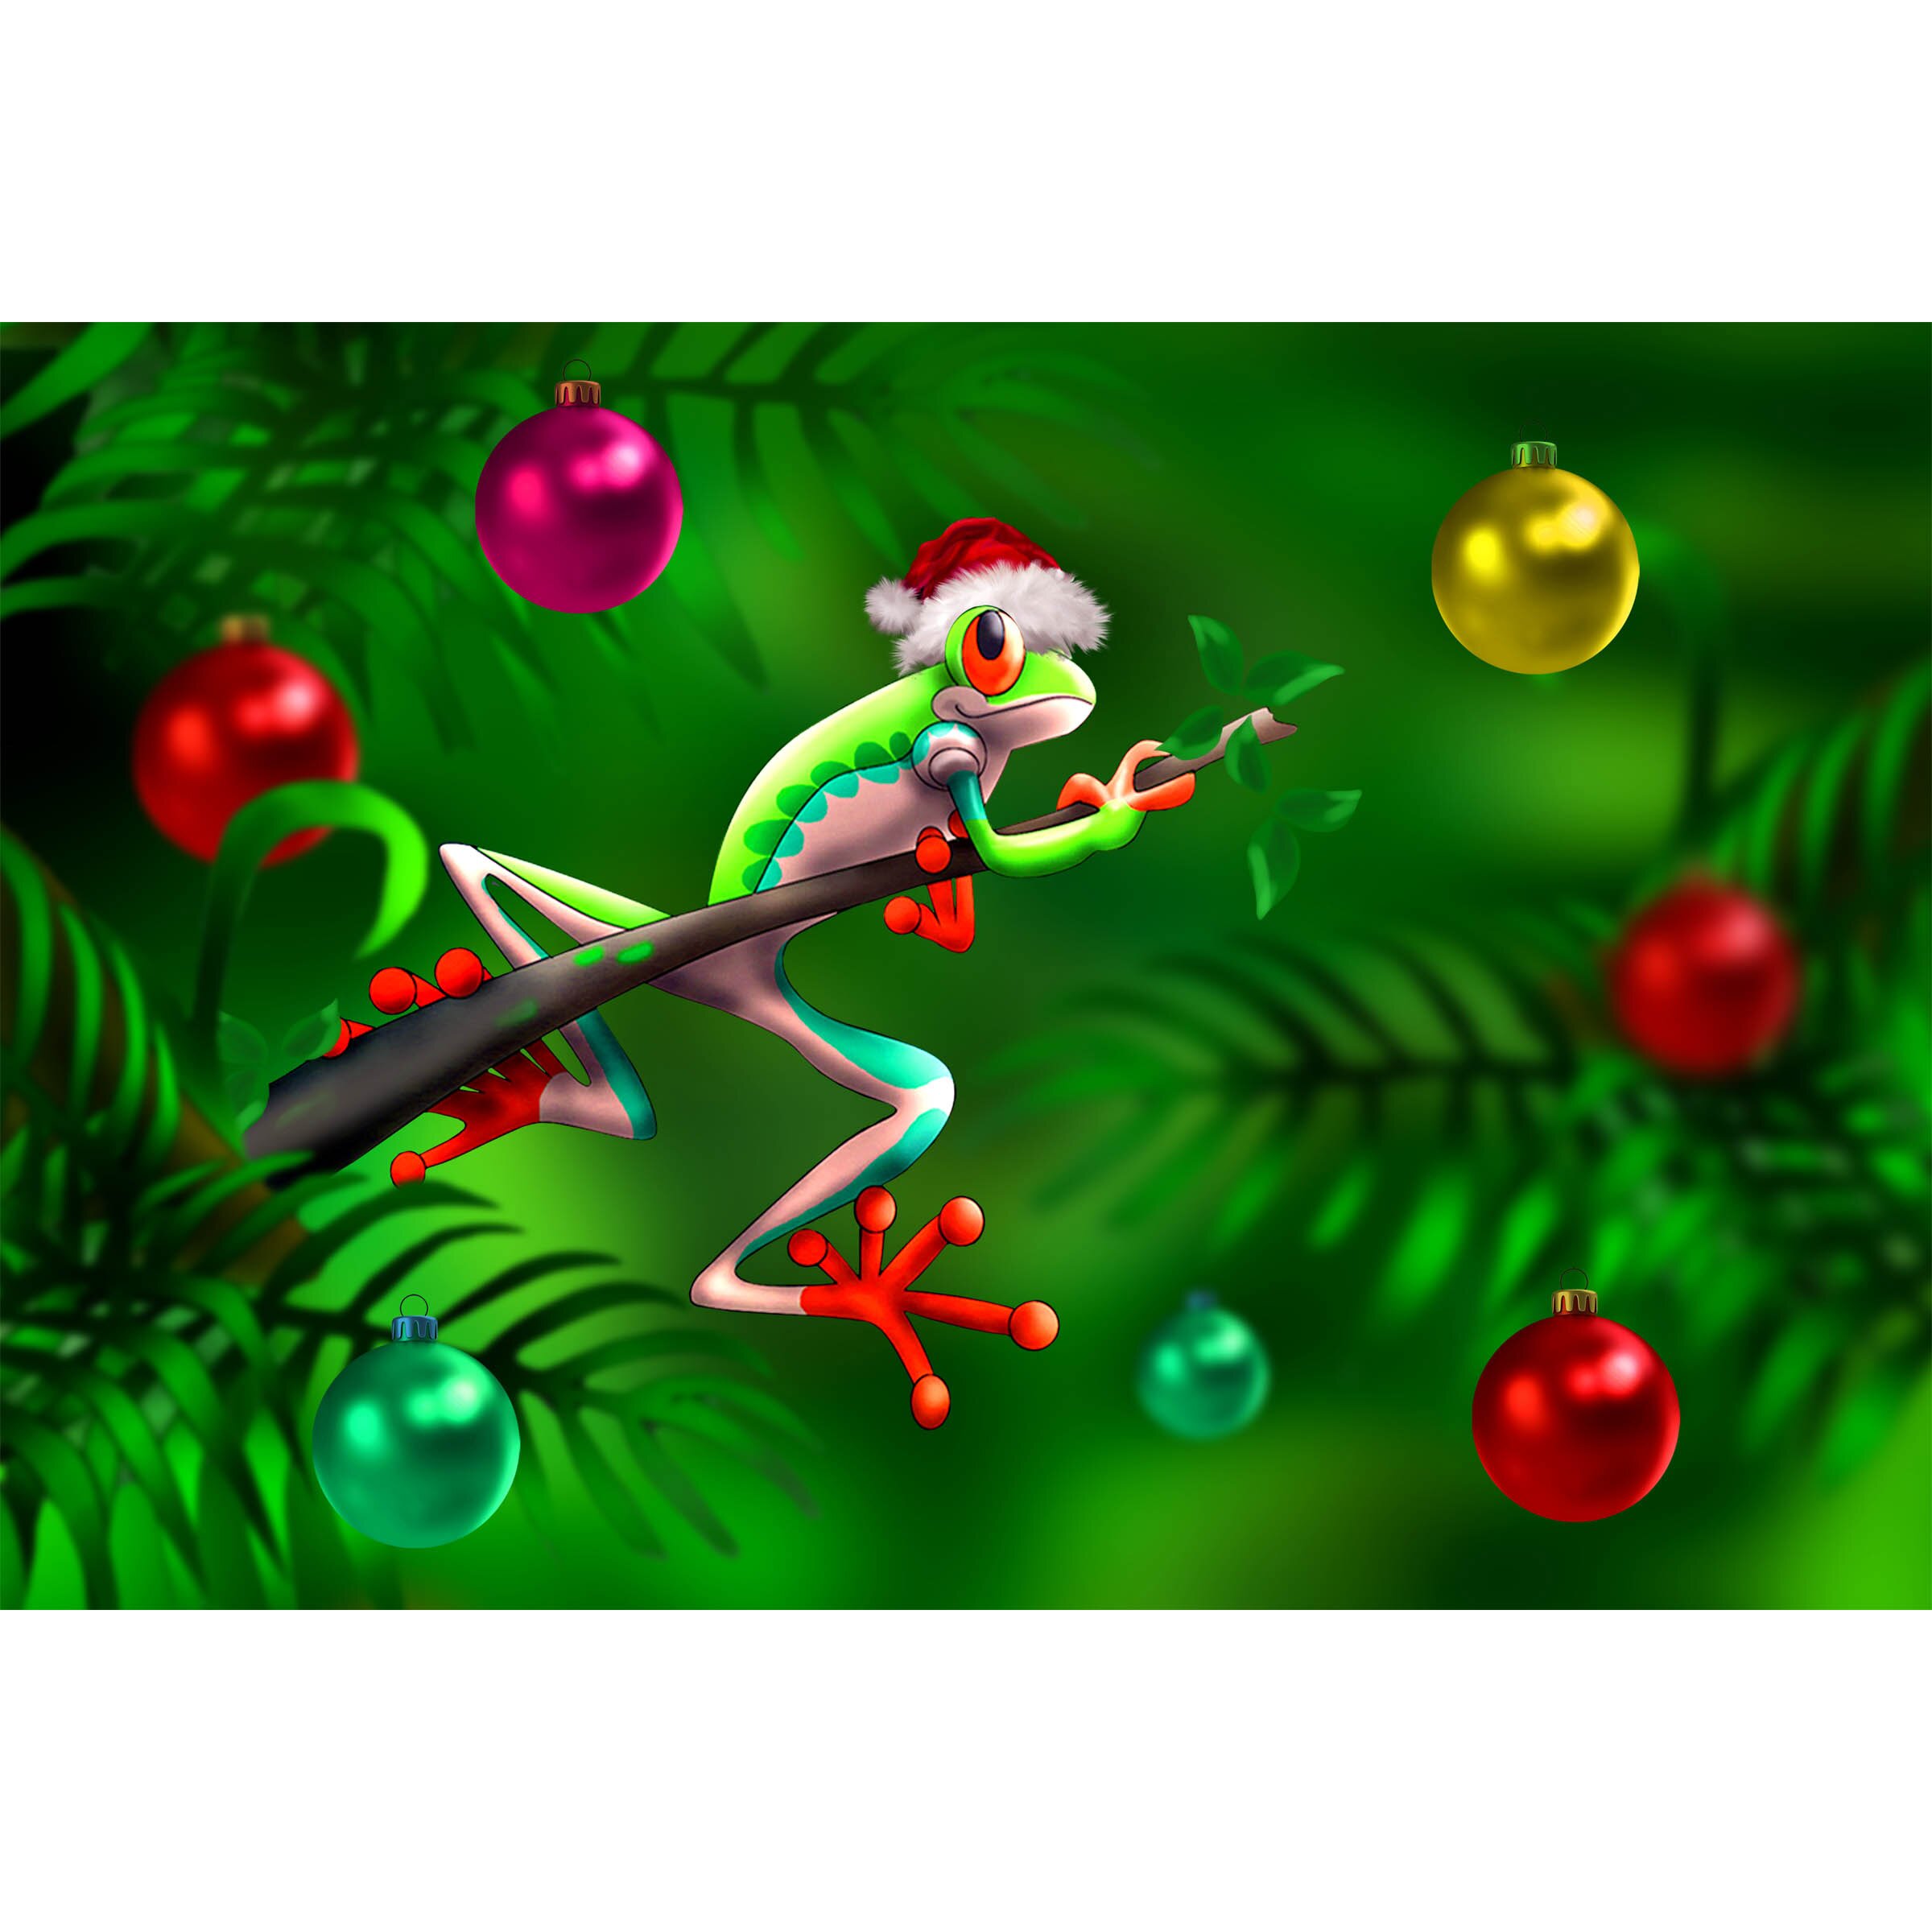 Christmas Download Amazing Frog